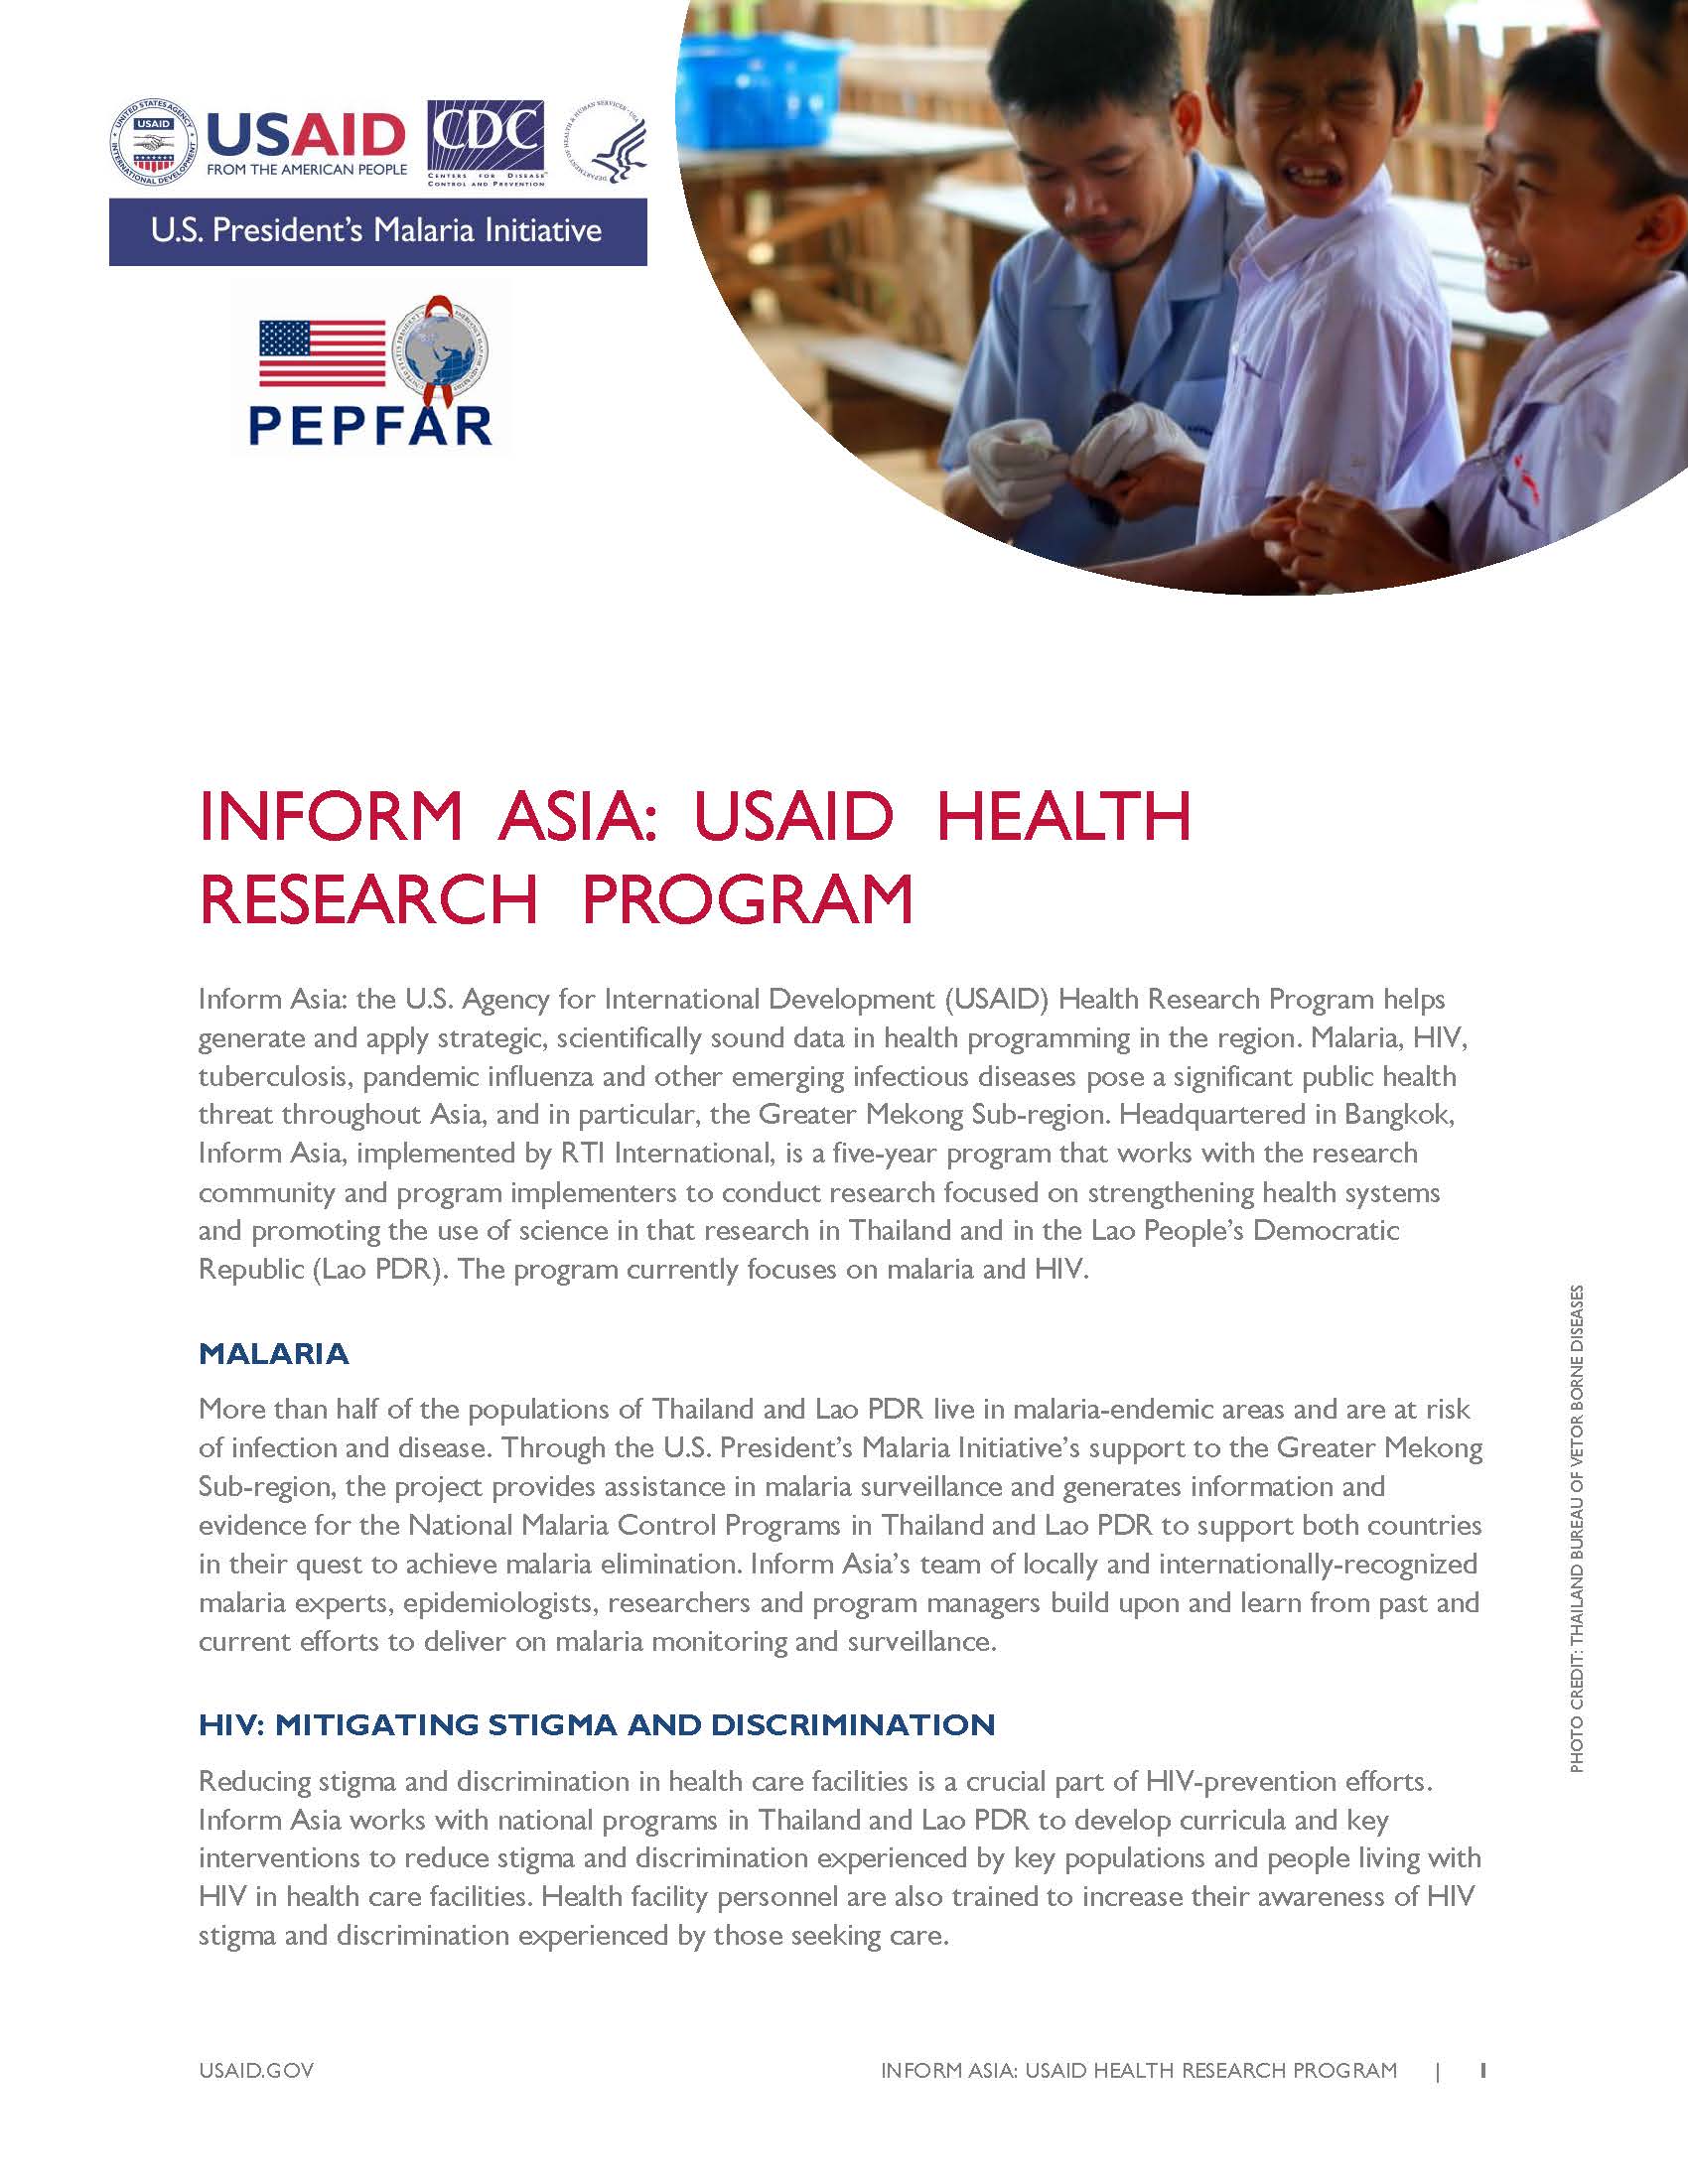 Inform Asia: USAID’s Health Research Program